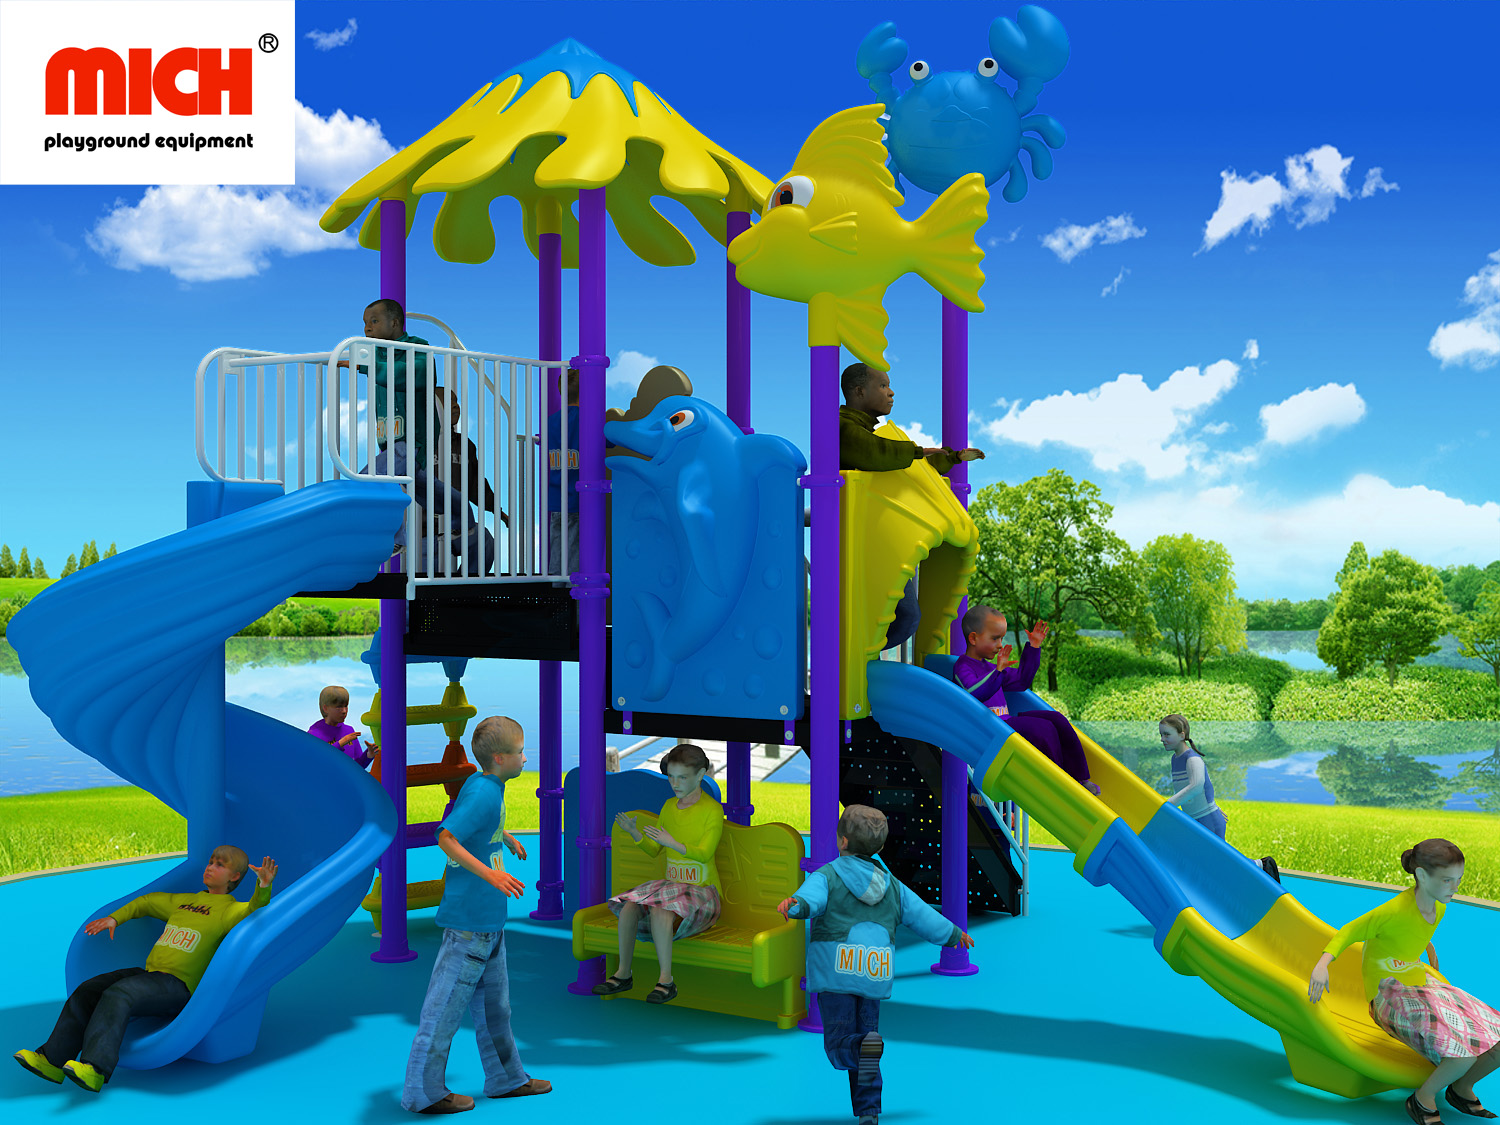 Kids Outdoor Playground Slide for Sale